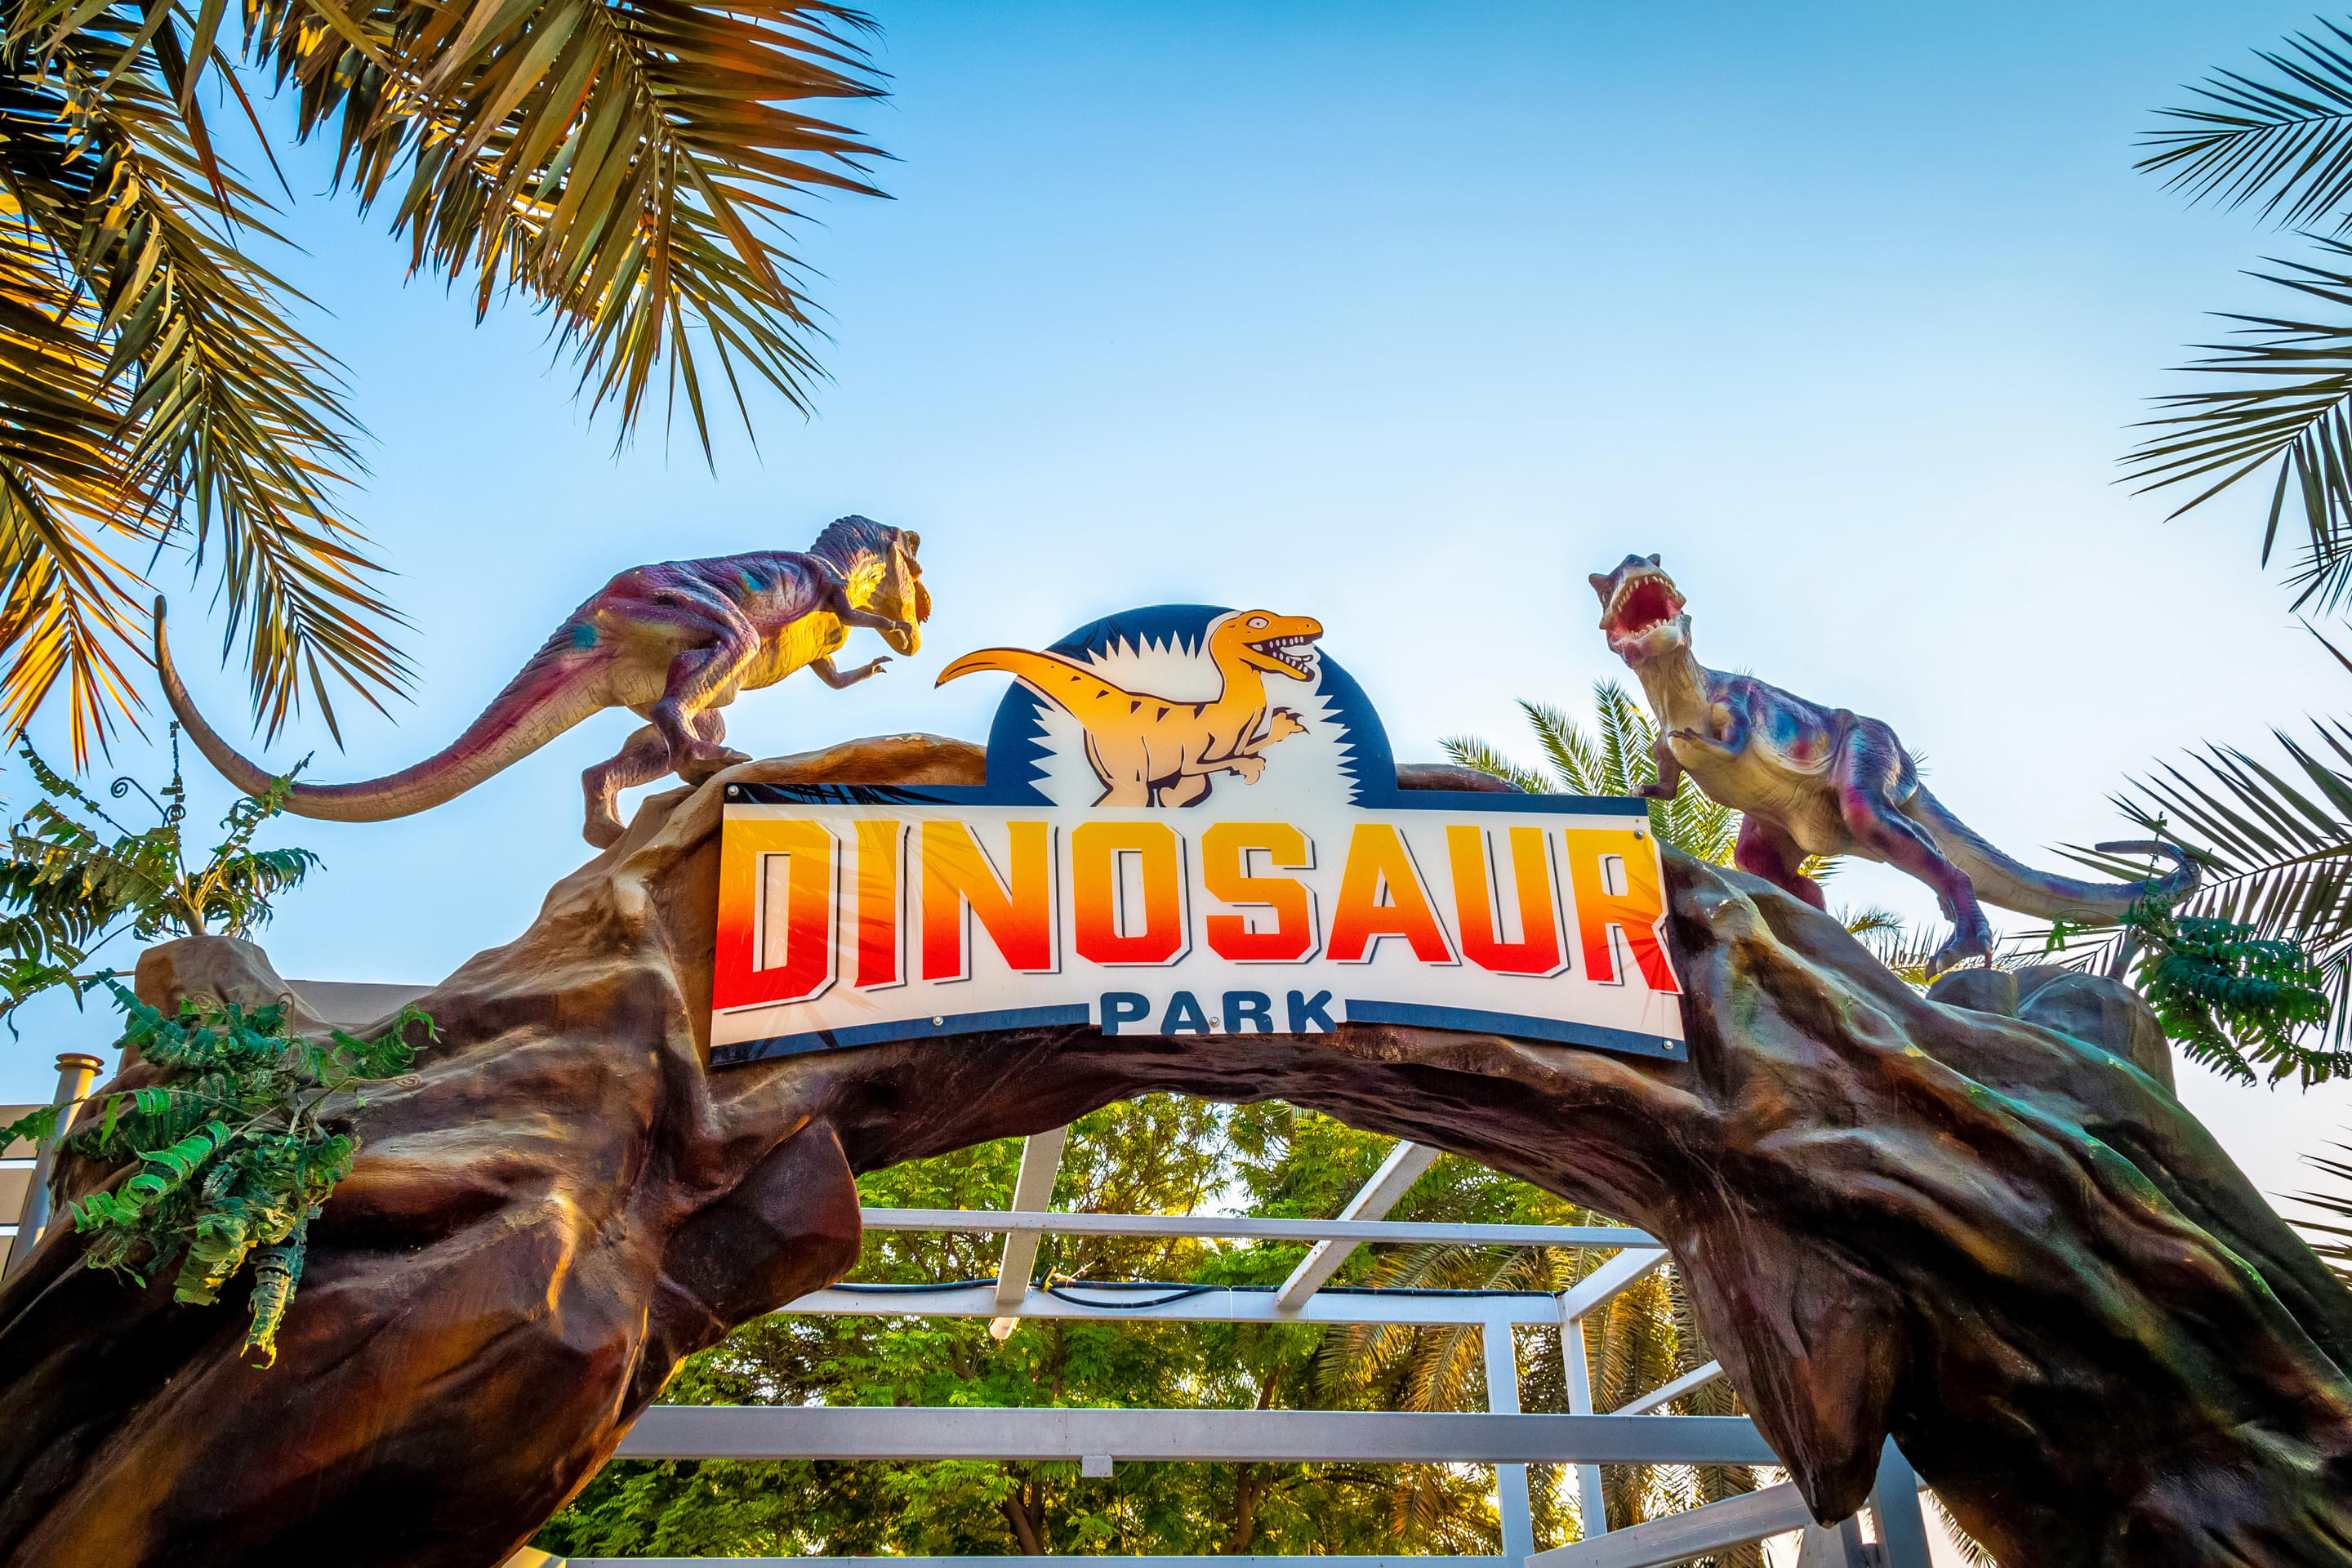 Dinosaur Park Overview